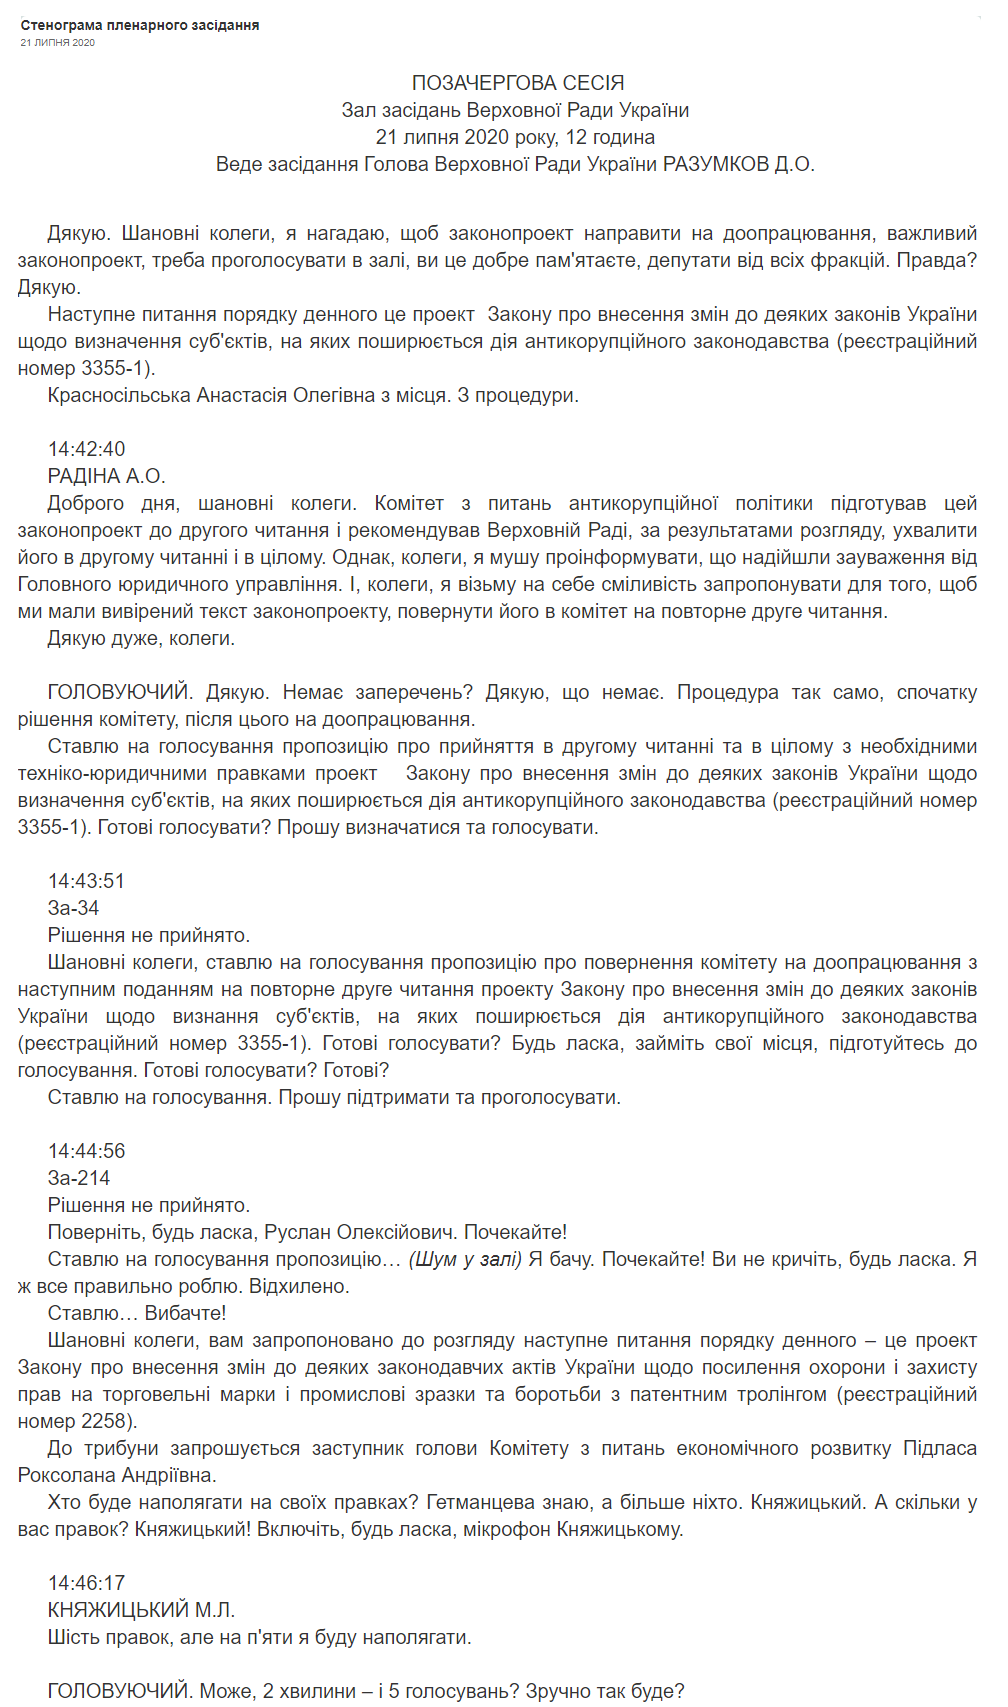 https://iportal.rada.gov.ua/meeting/stenogr/show/7505.html